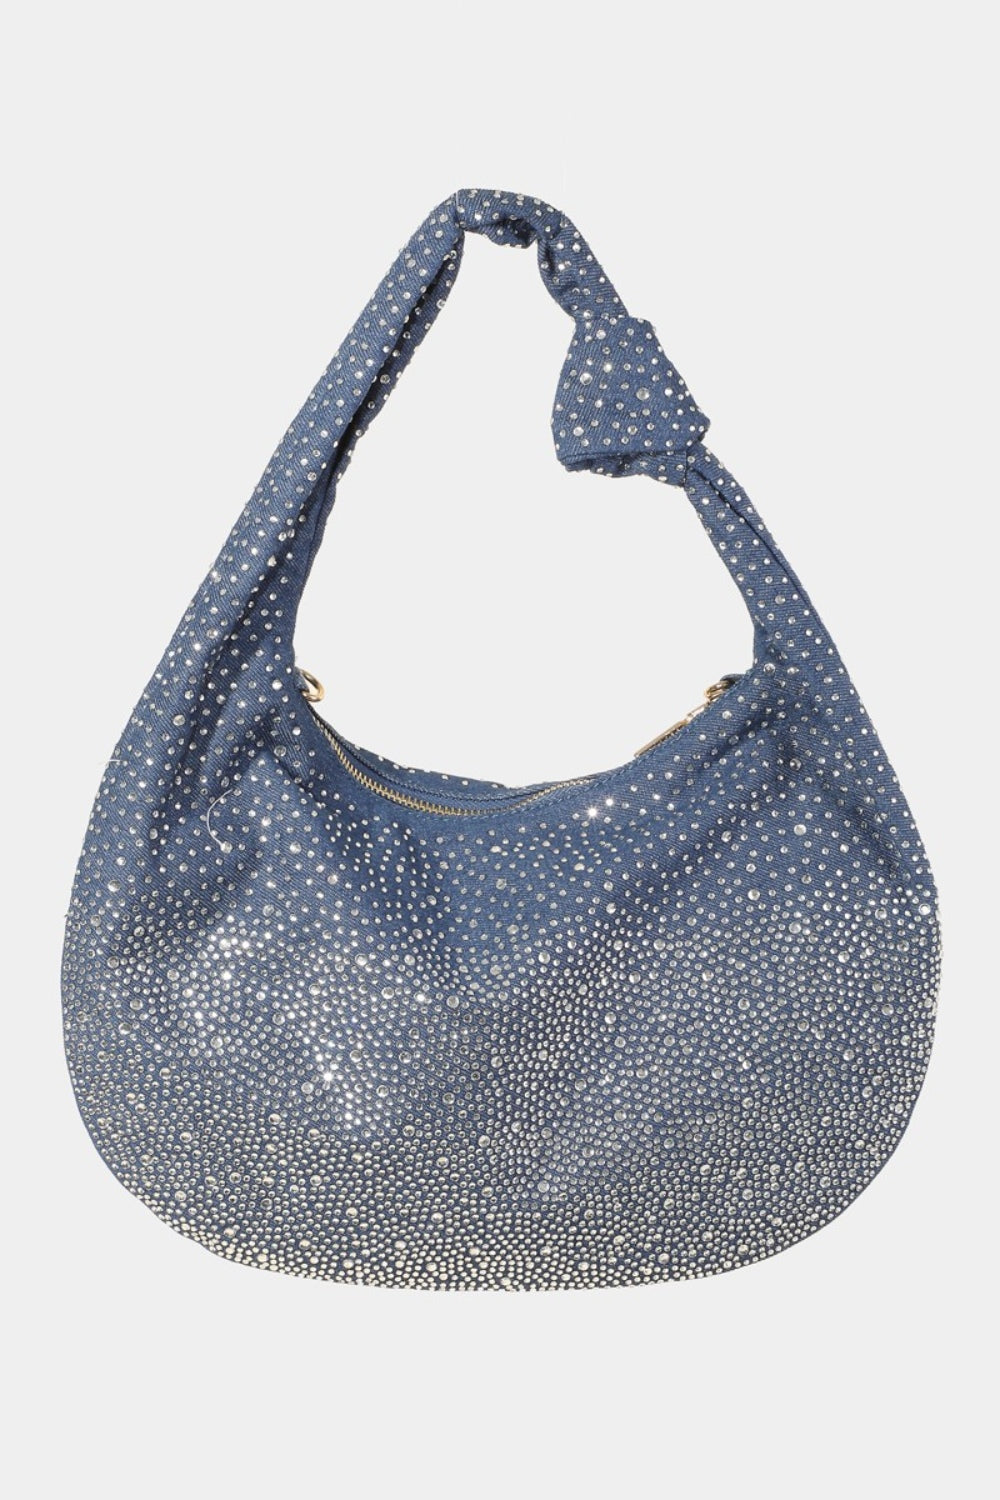 TEEK - Rhinestone Studded Handbag BAG TEEK Trend Dark Denim One Size 